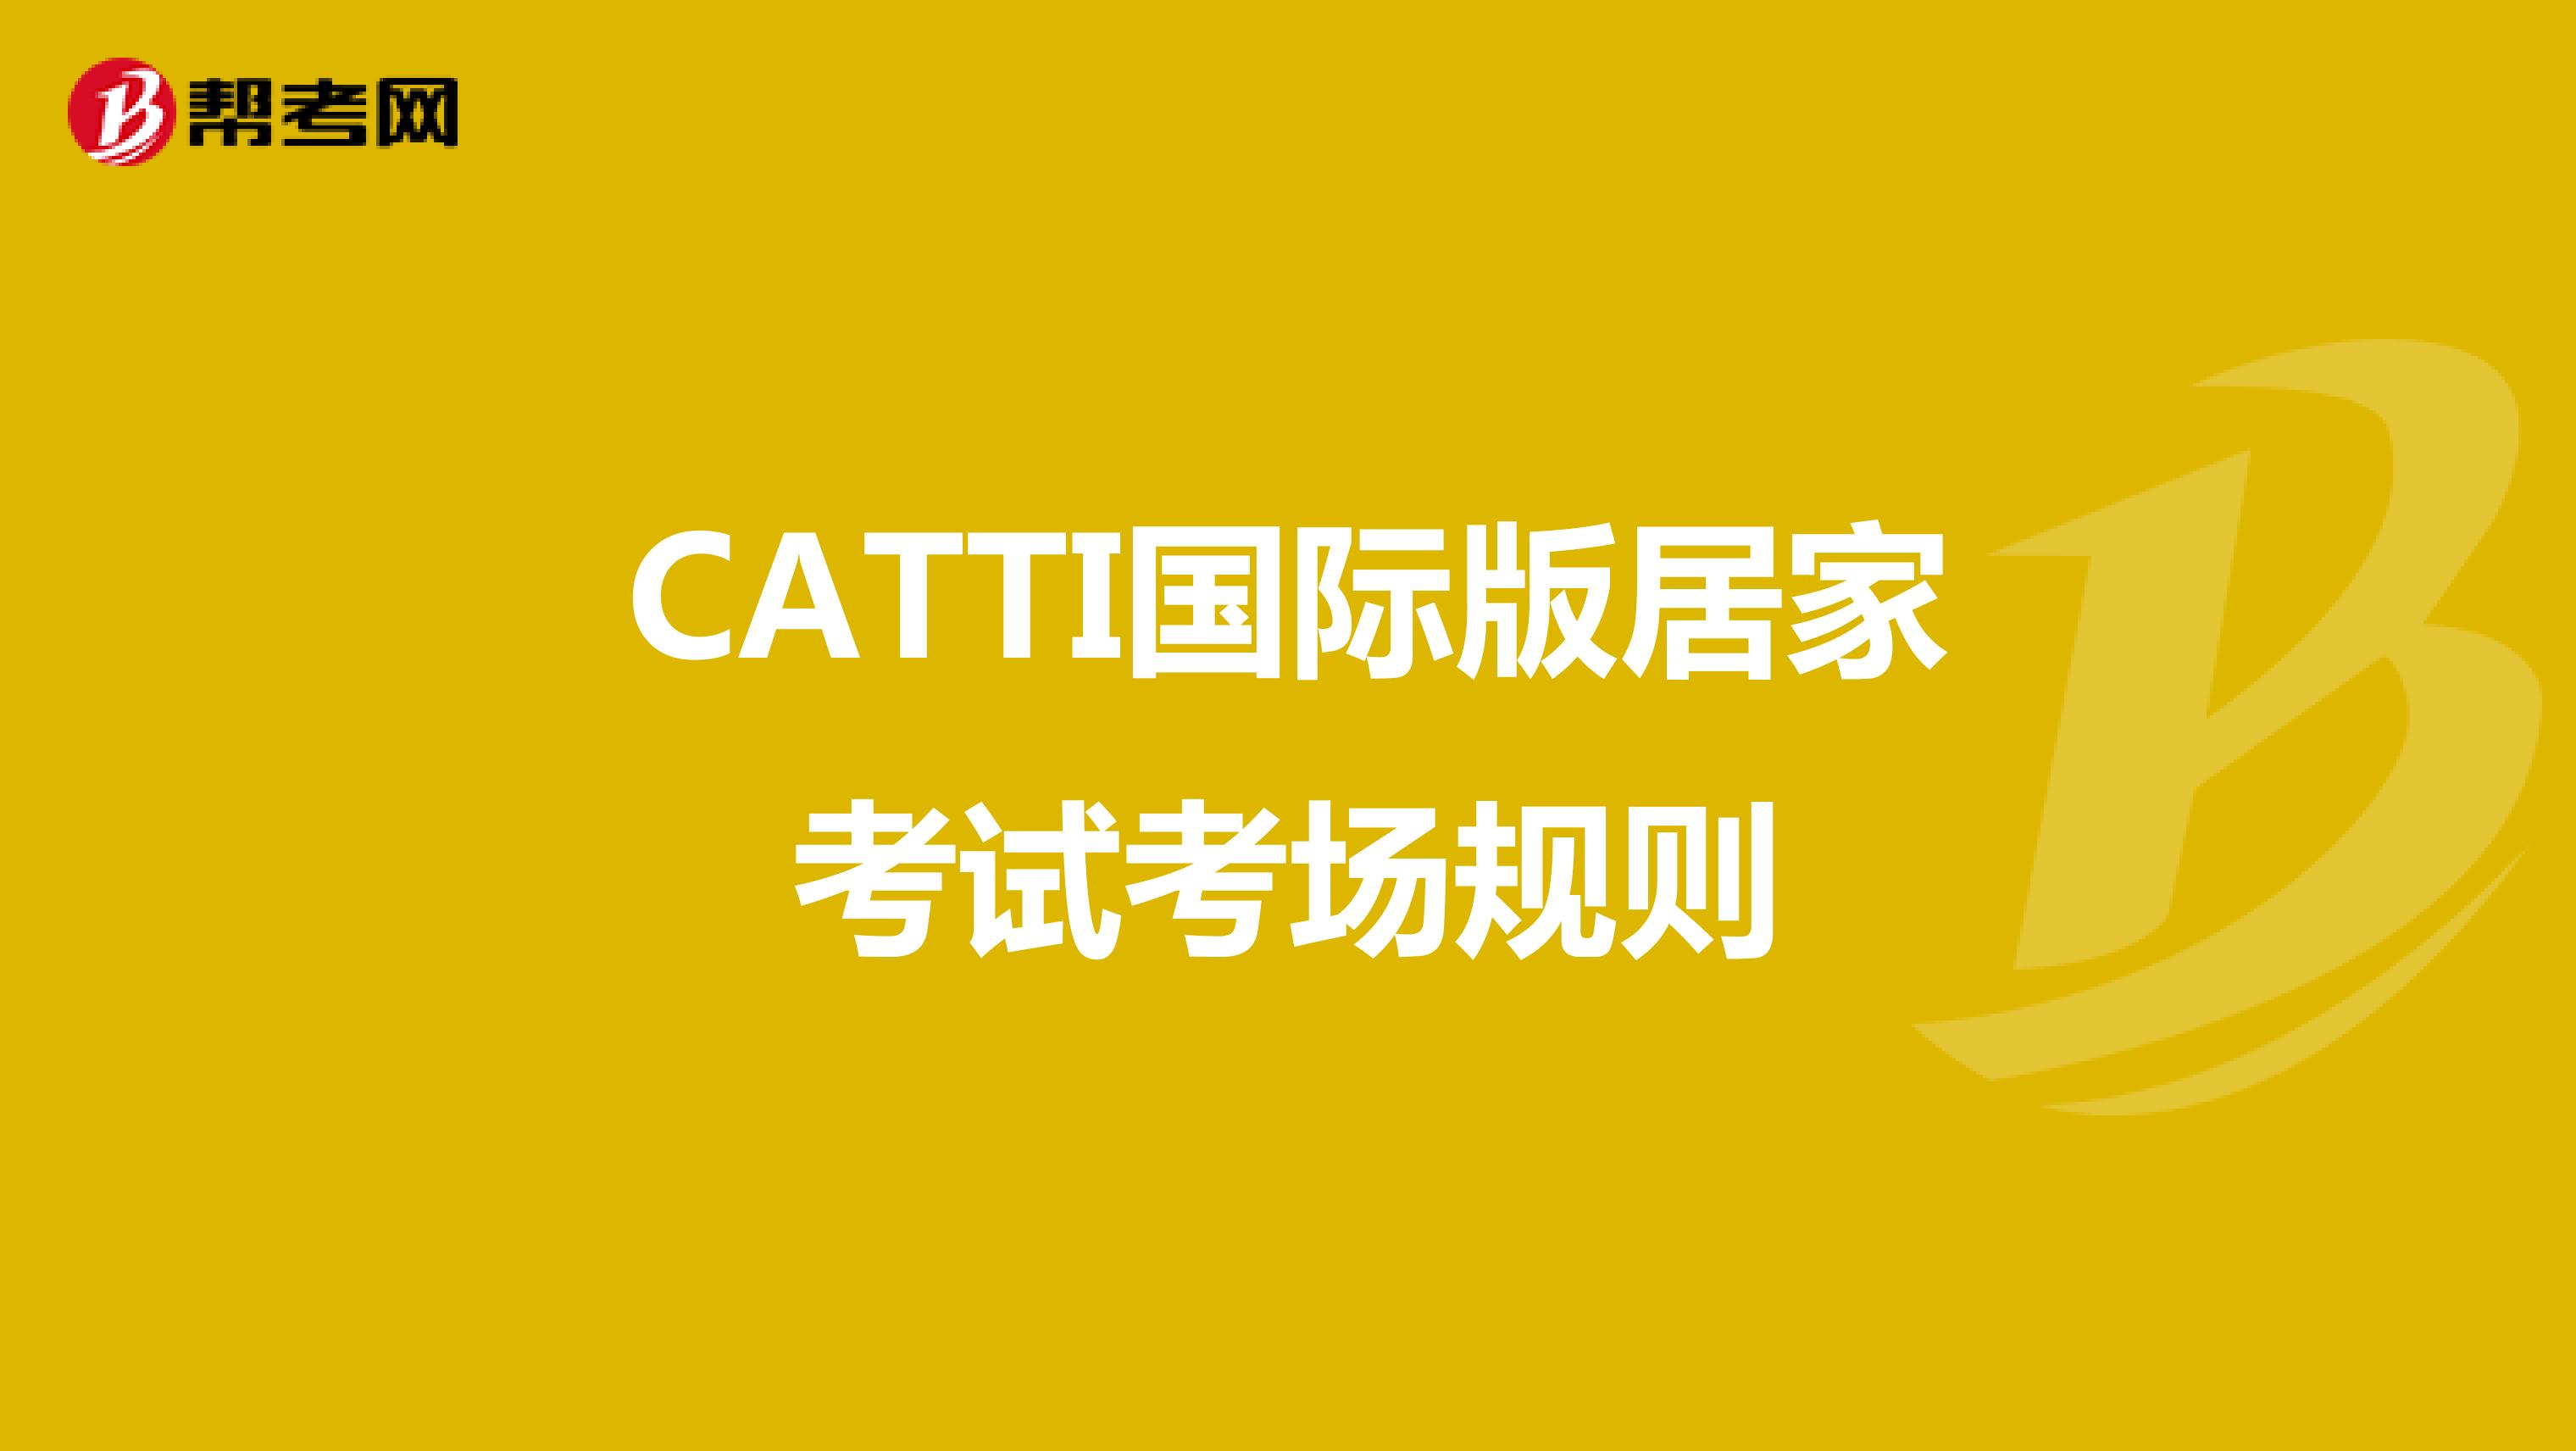 CATTI国际版居家考试考场规则